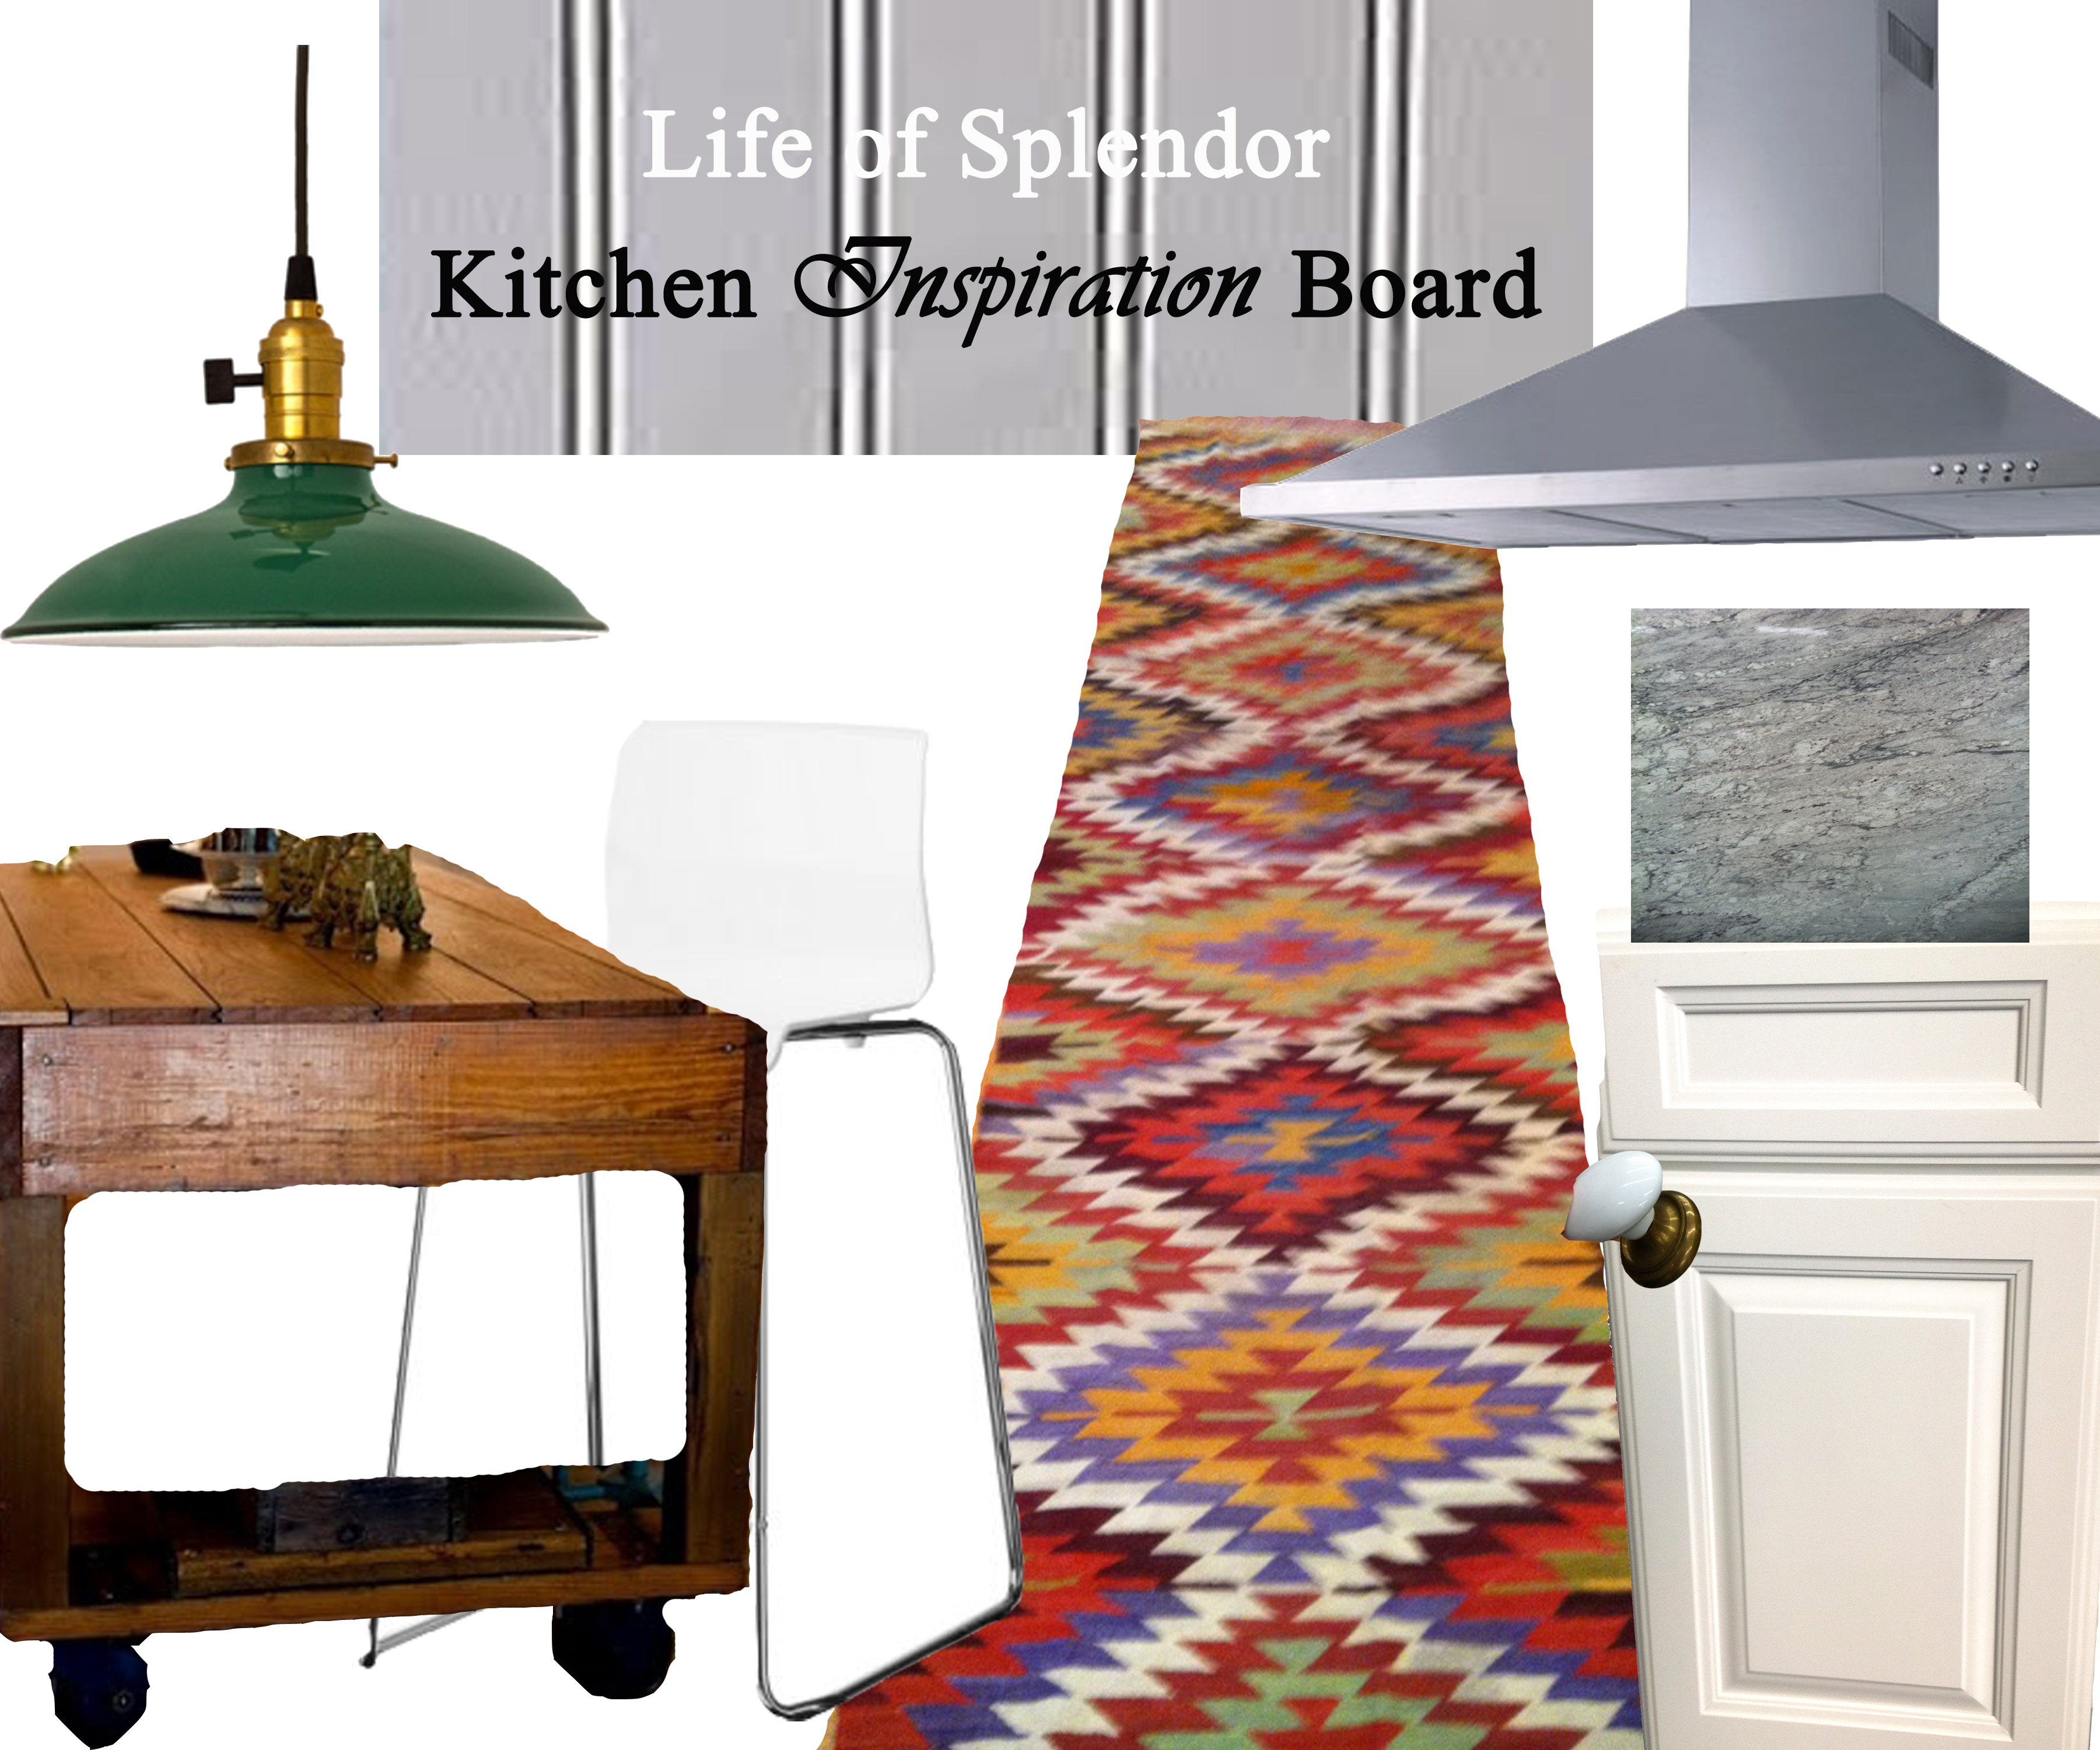 Life-of-Splendor-Kitchen-Inspiration-Board-copy1